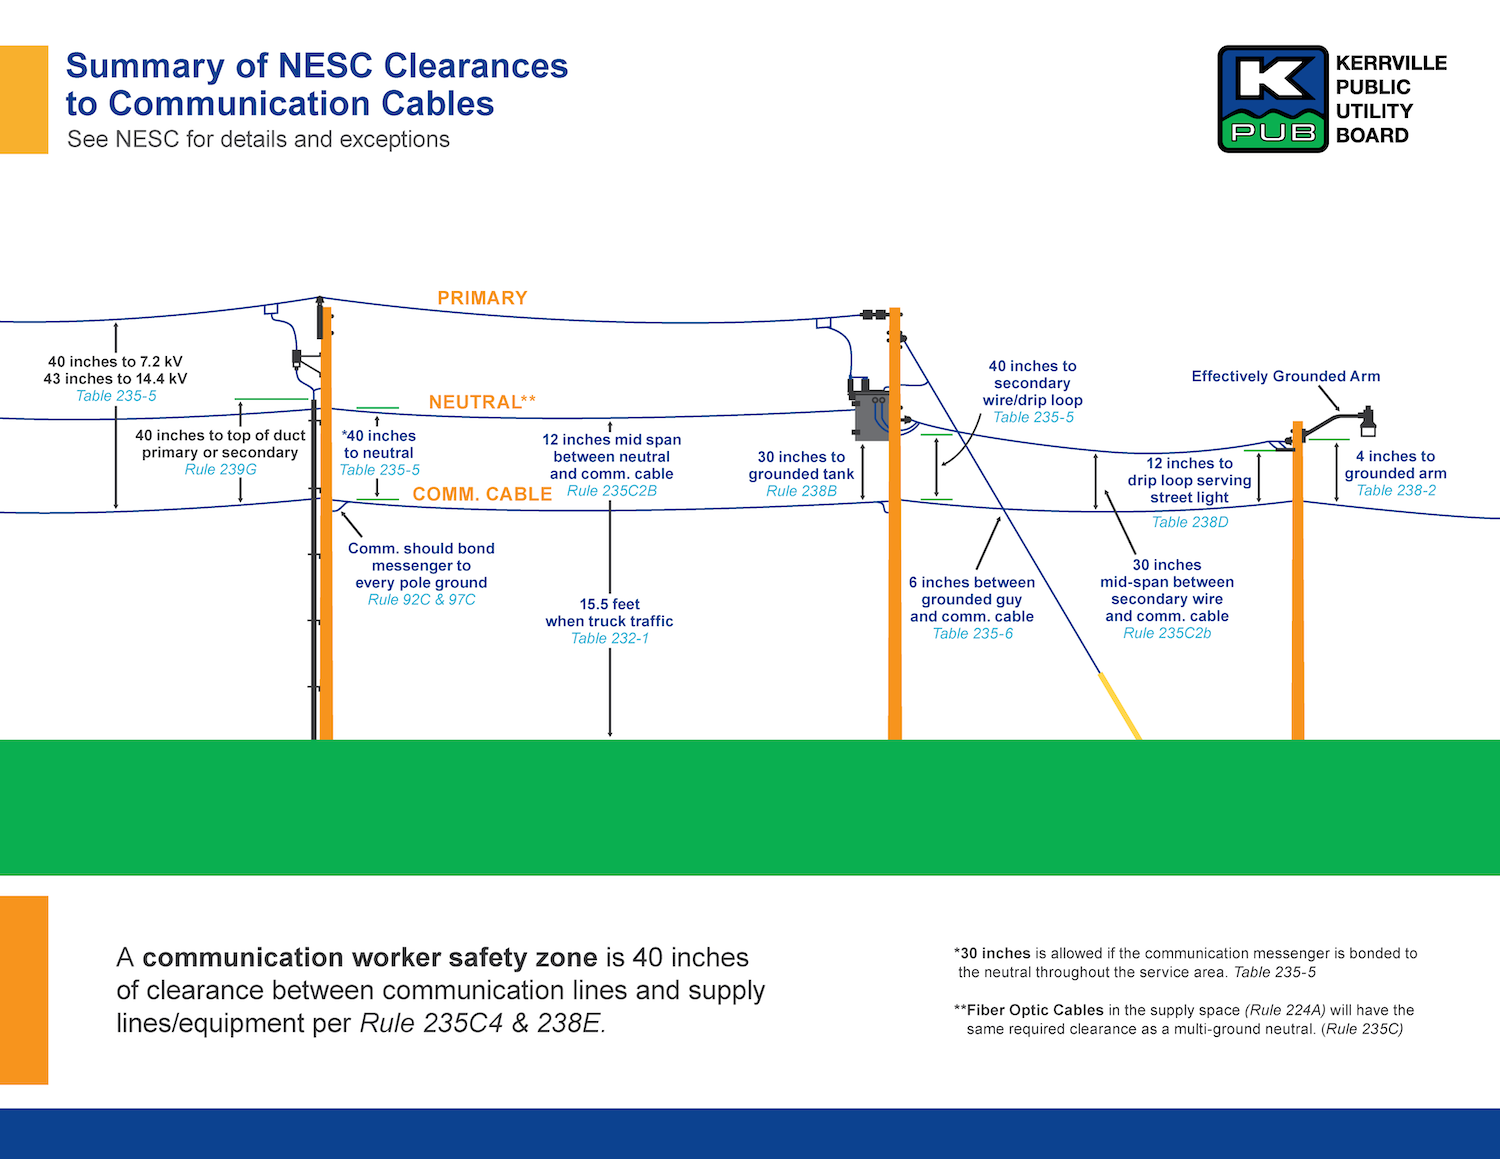 KPUB Summary of NESC Clearances